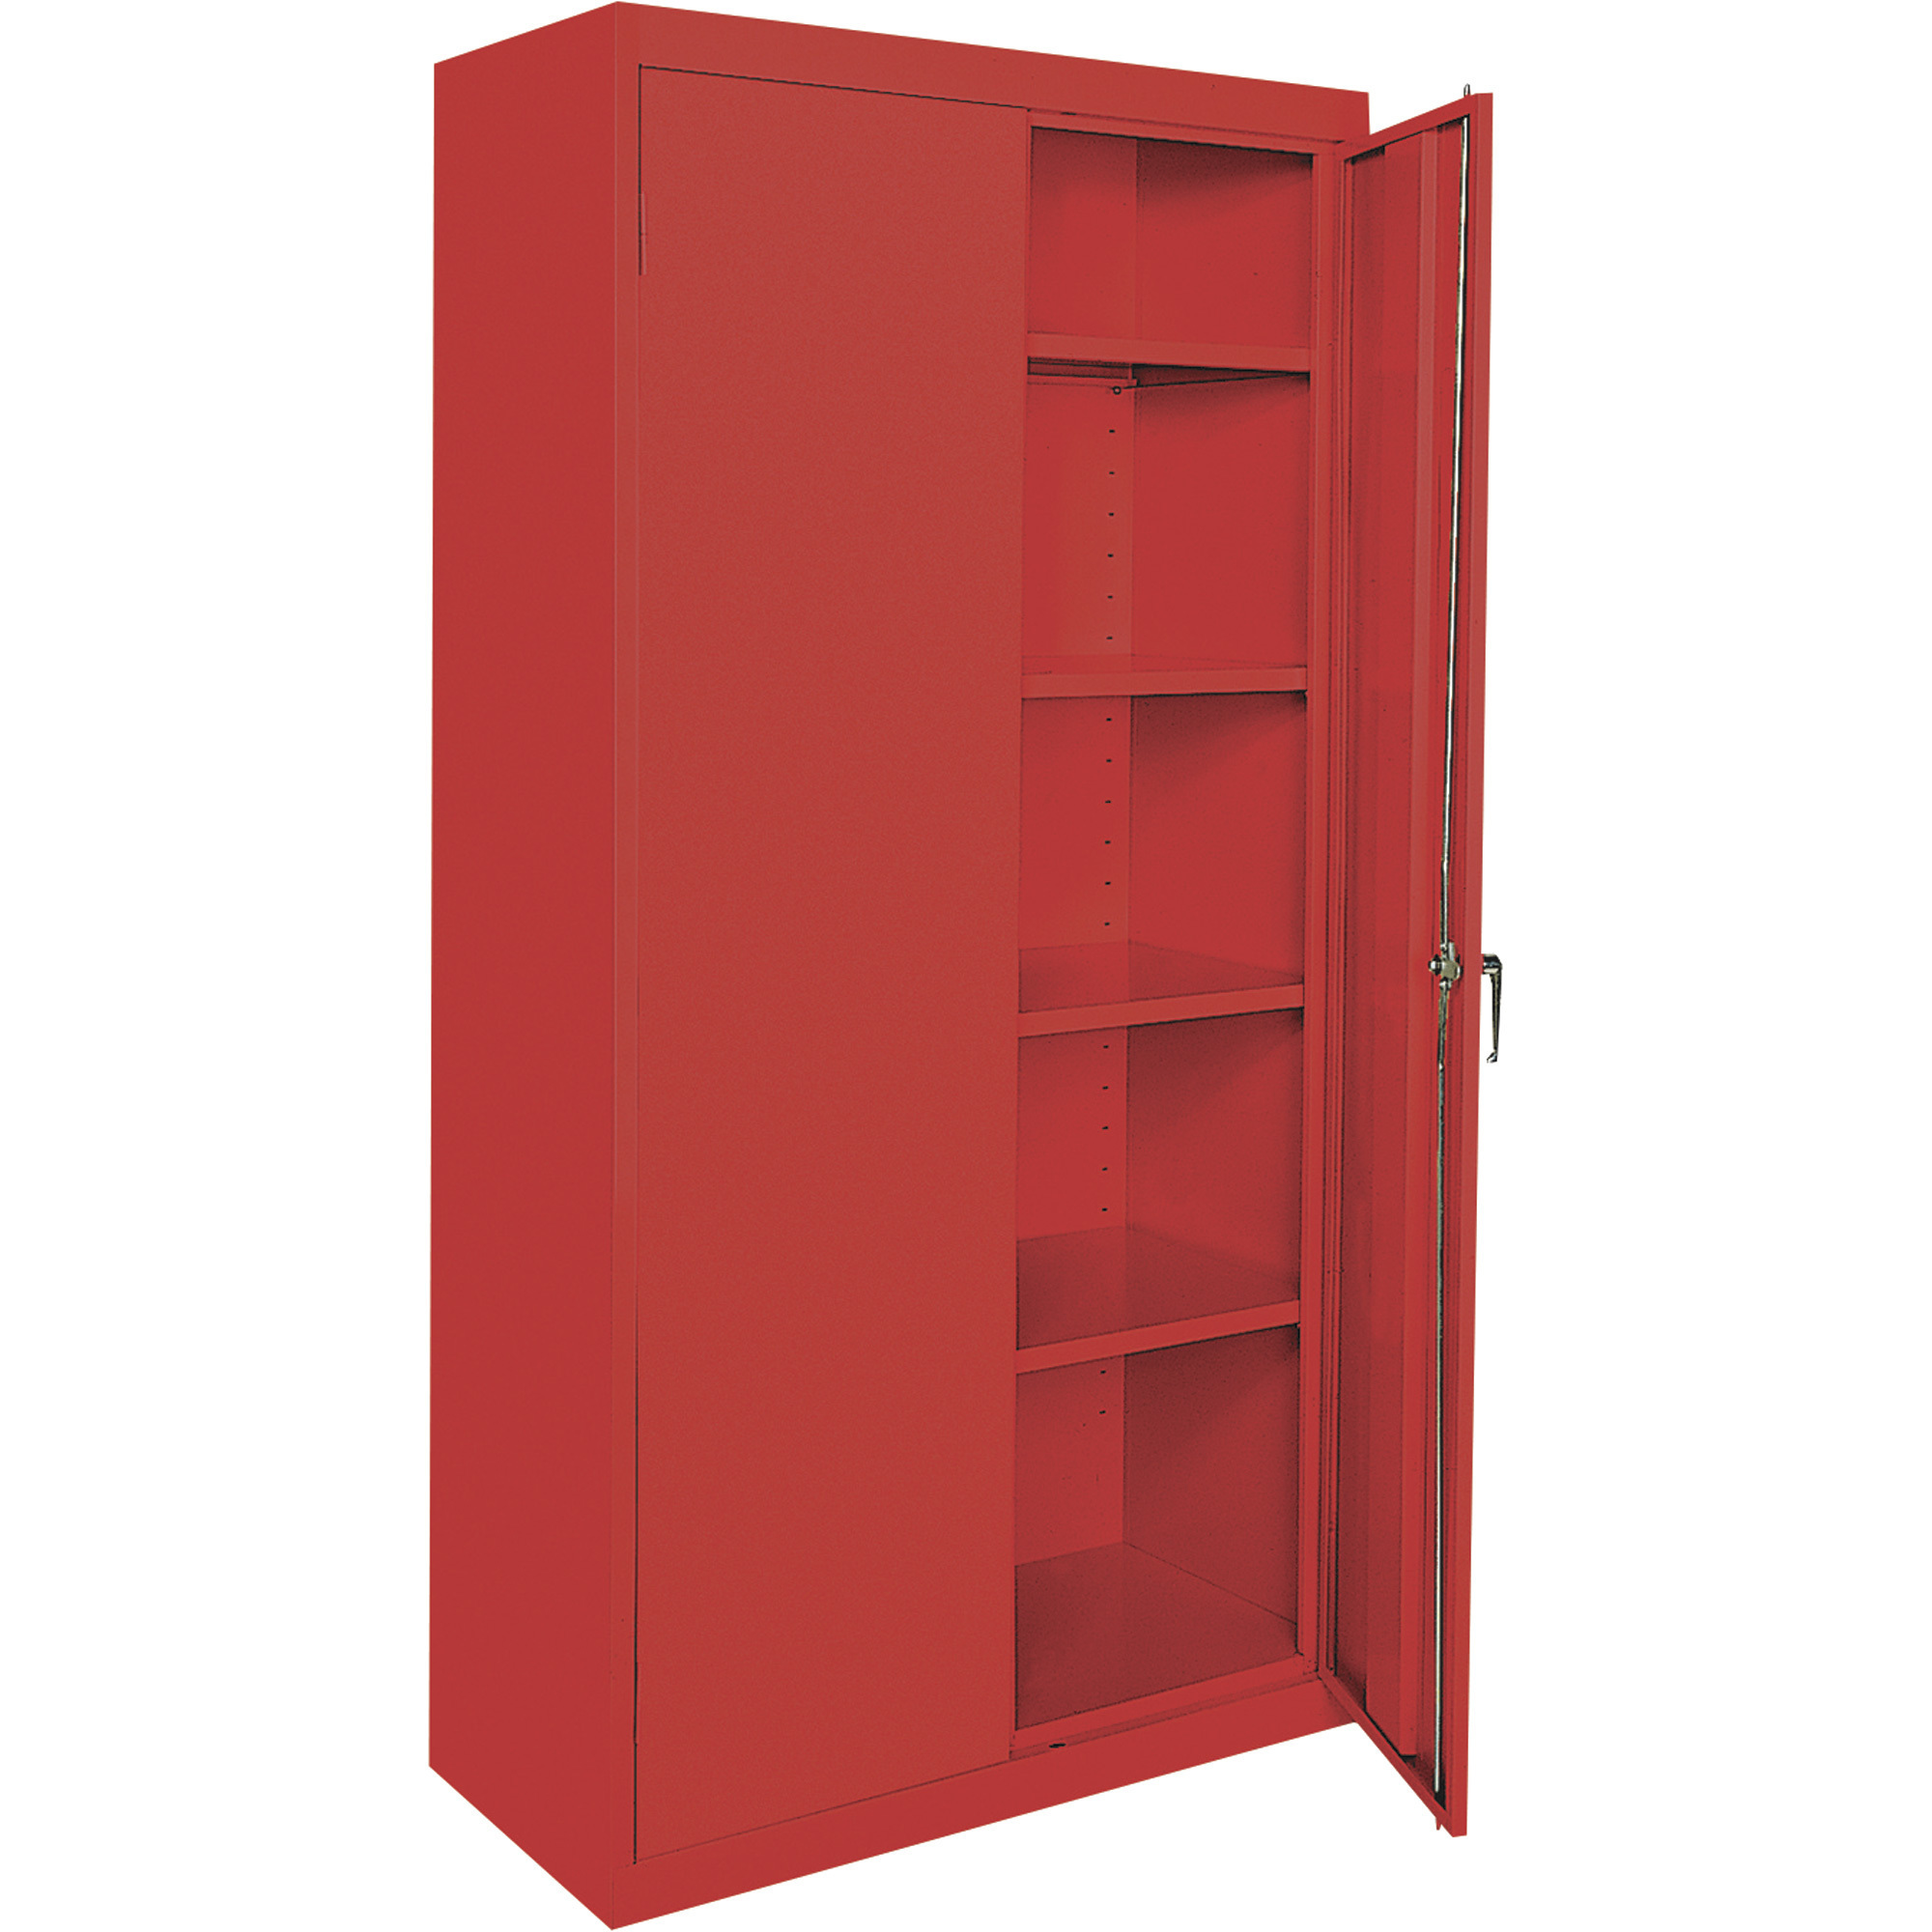 Commercial Grade All Welded Steel Cabinet — 36Inch W x 24Inch D x 72Inch H, Red, Model - Sandusky Lee CA41362472-01